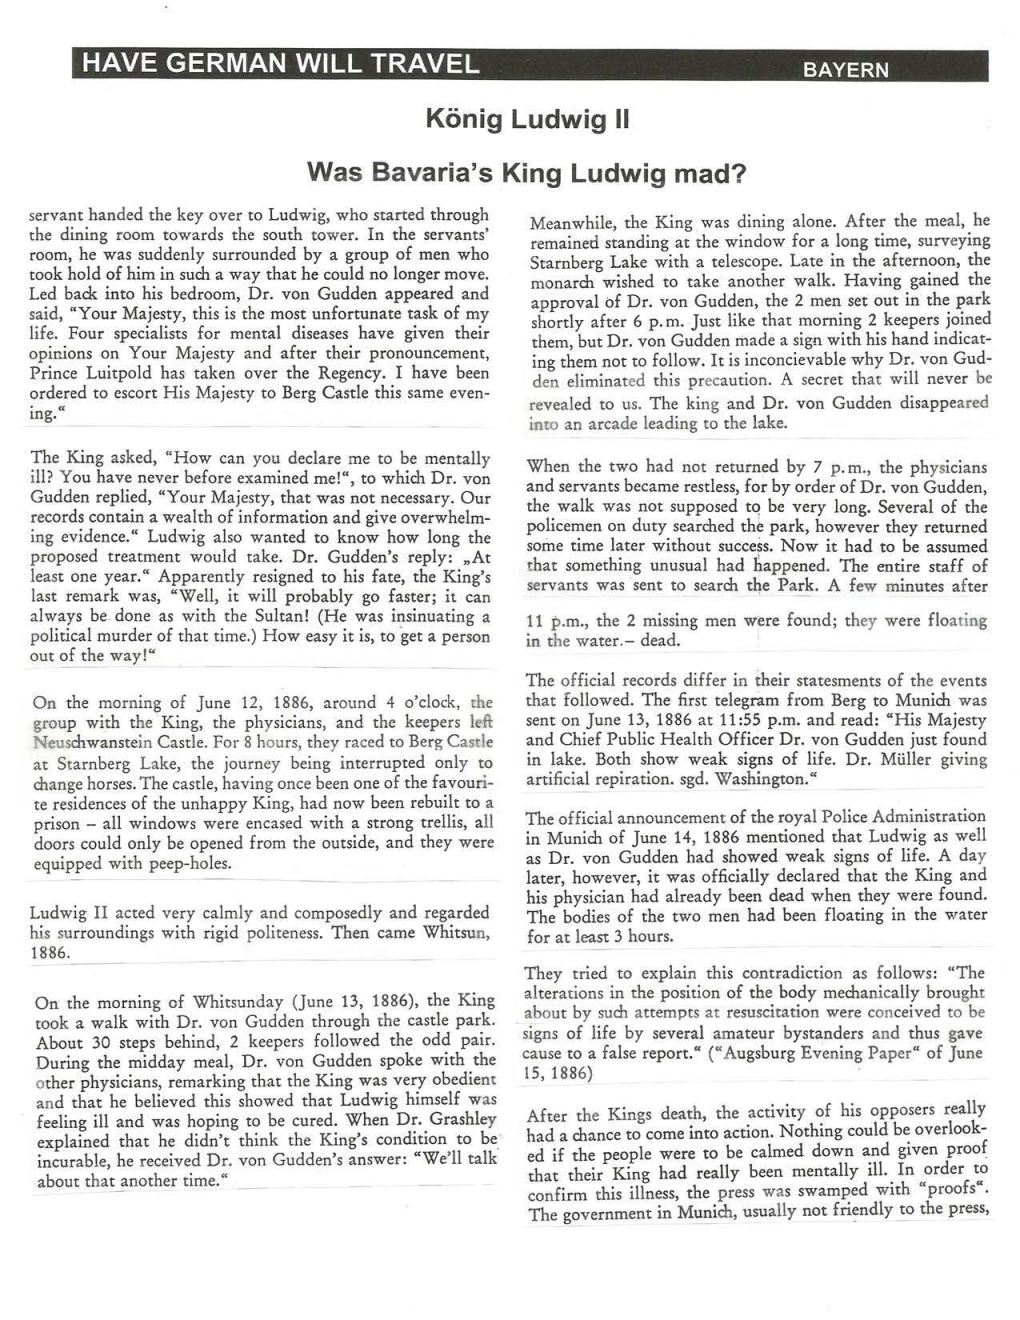 HAVE GERMAN WILL TRAVEL Konig Ludwig 11 Was Bavaria's King Ludwig Mad?